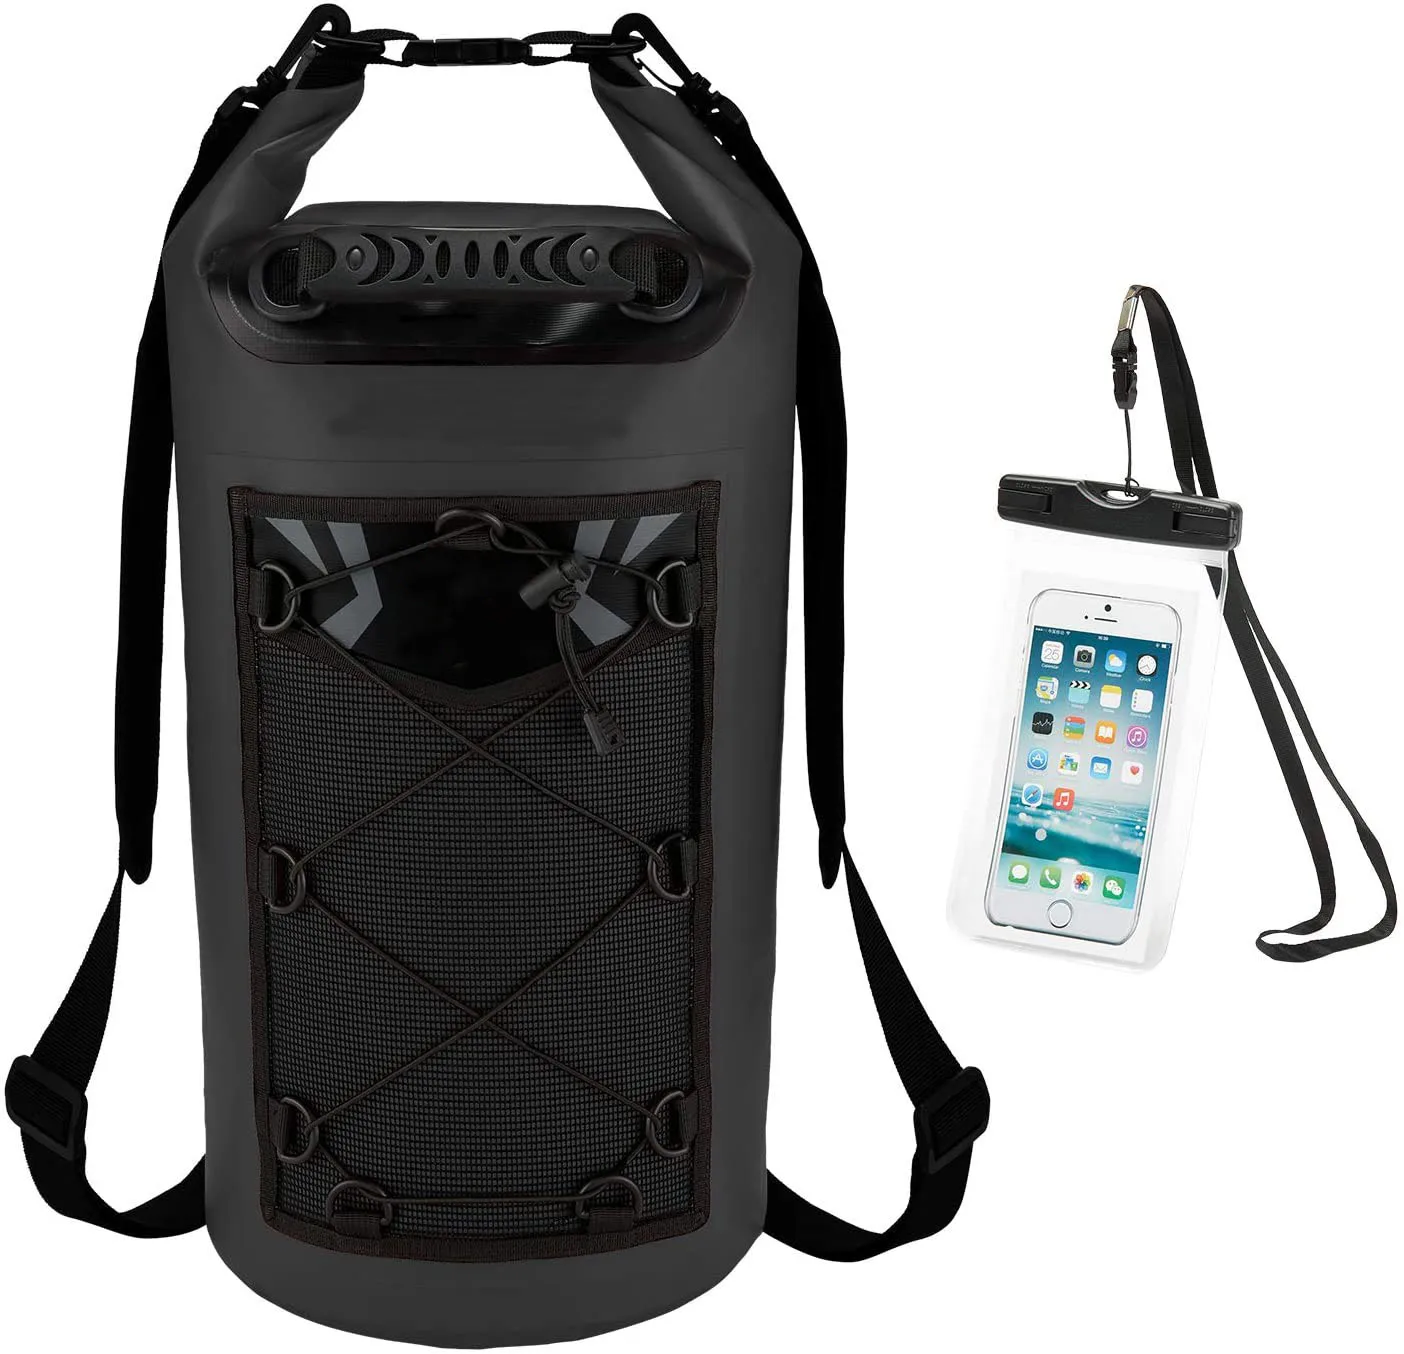 
Waterproof Floating Dry Bag Backpack for Water Sports 